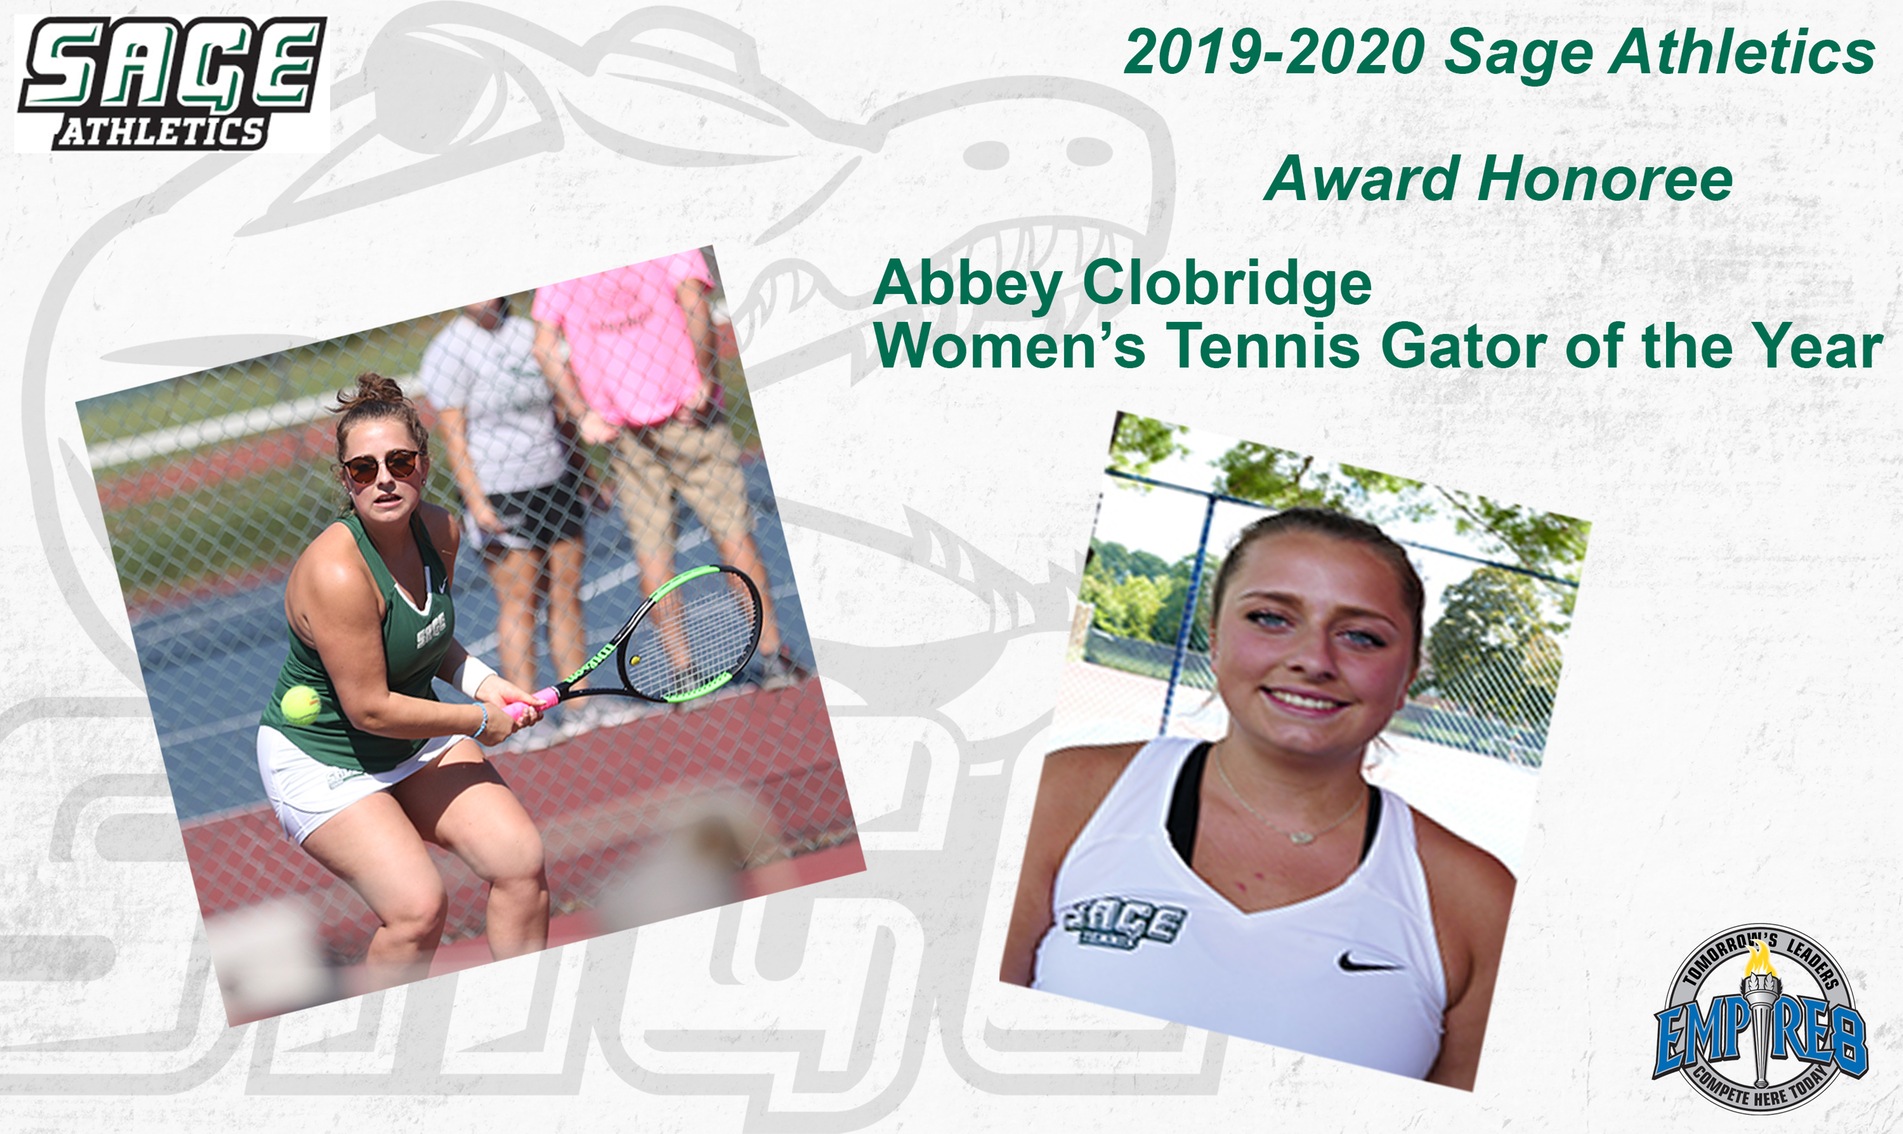 Abby Clobridge named Women's Tennis Gator of the Year